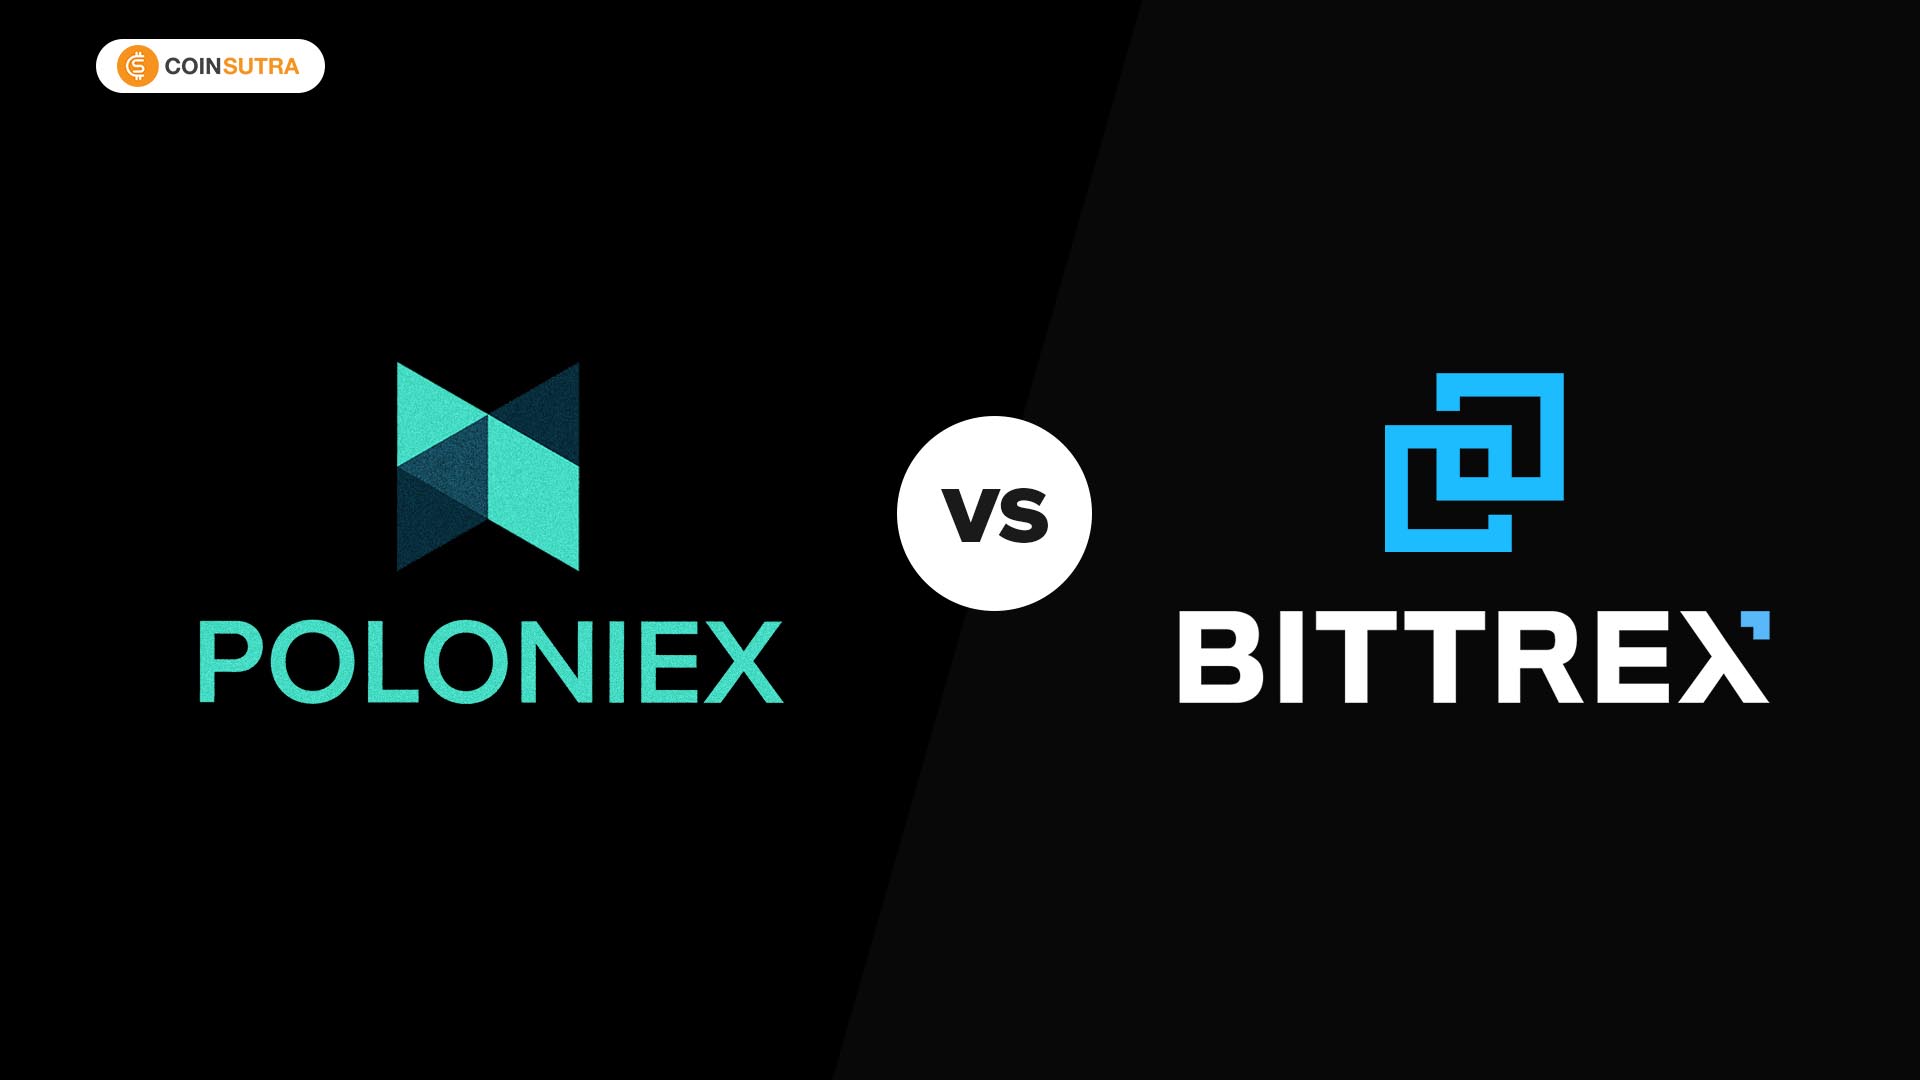 Poloniex Vs. Bittrex: Which Is Better? (Comparison)